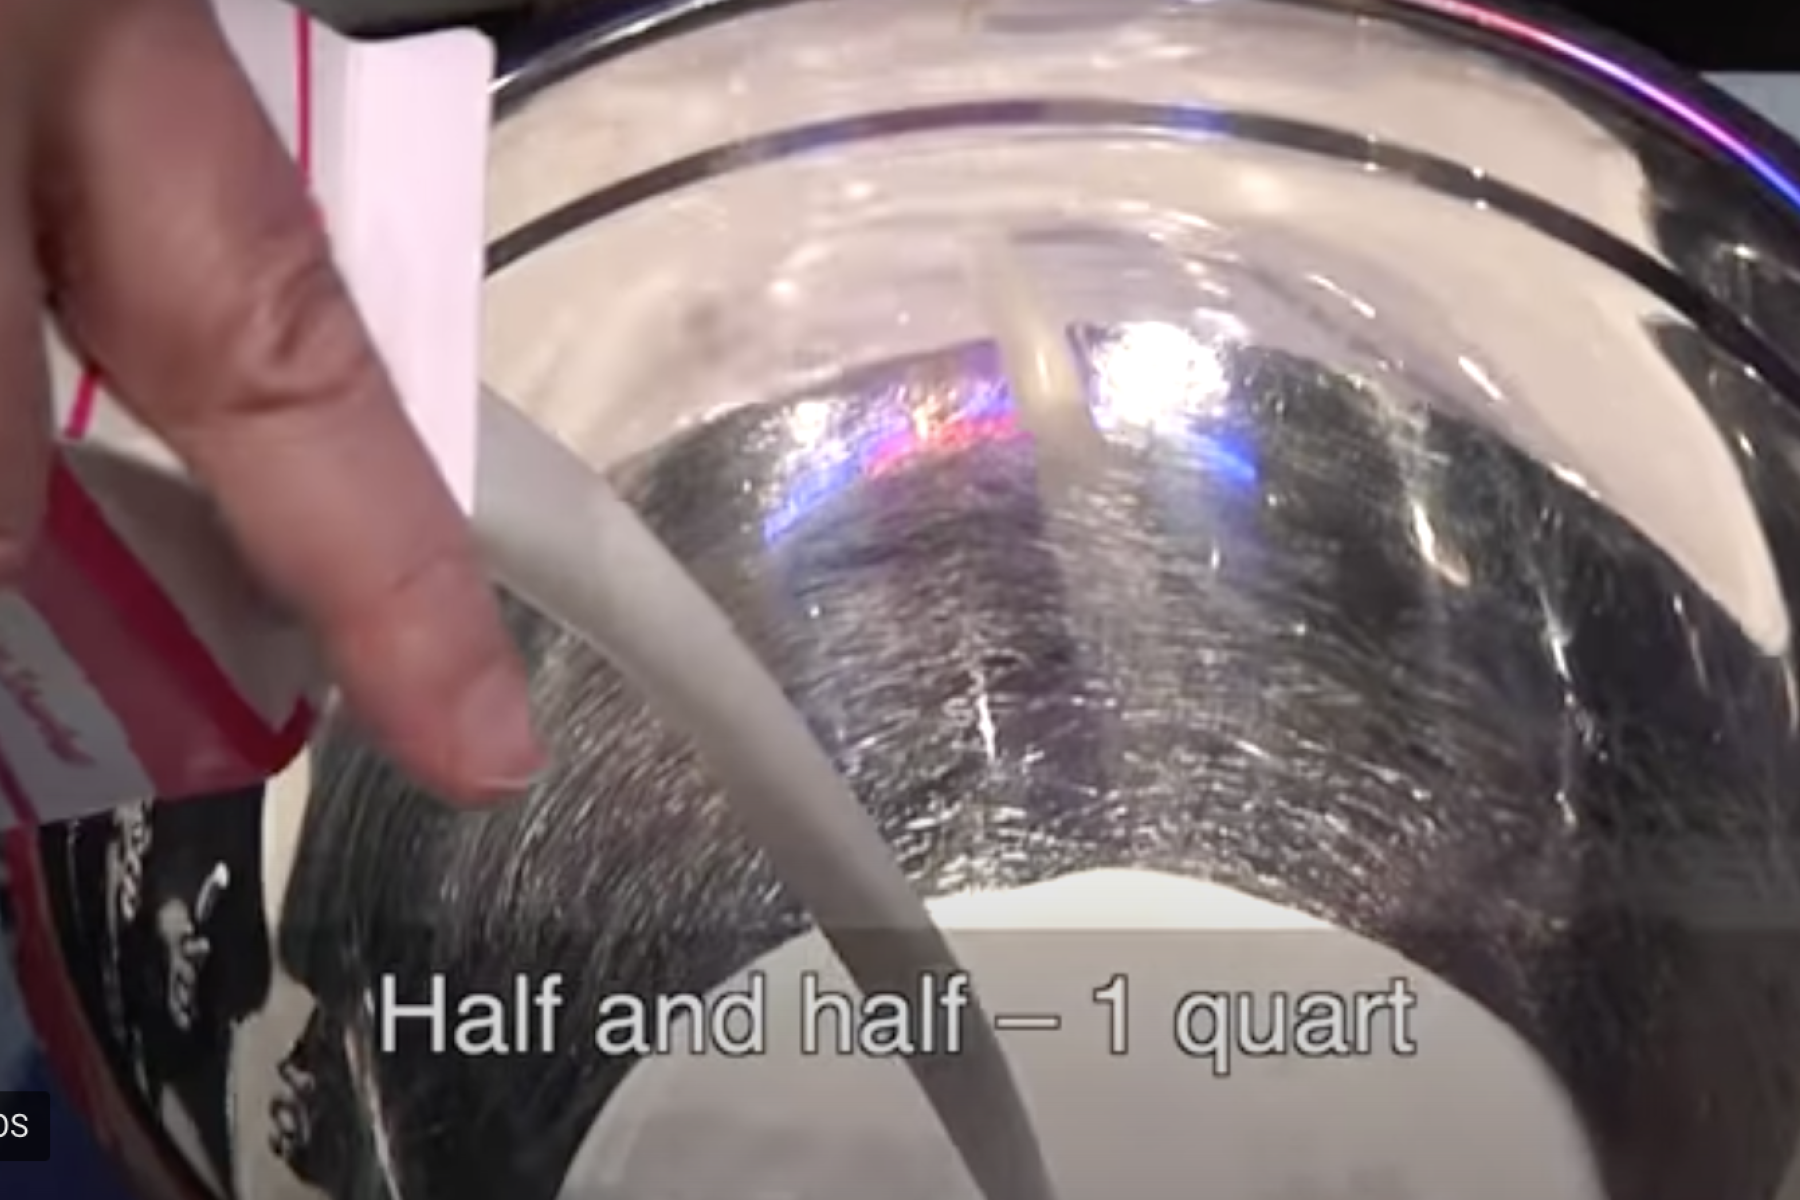 Nano ice cream activity Mr. O video screenshot of hand pouring half and half cream into a bowl